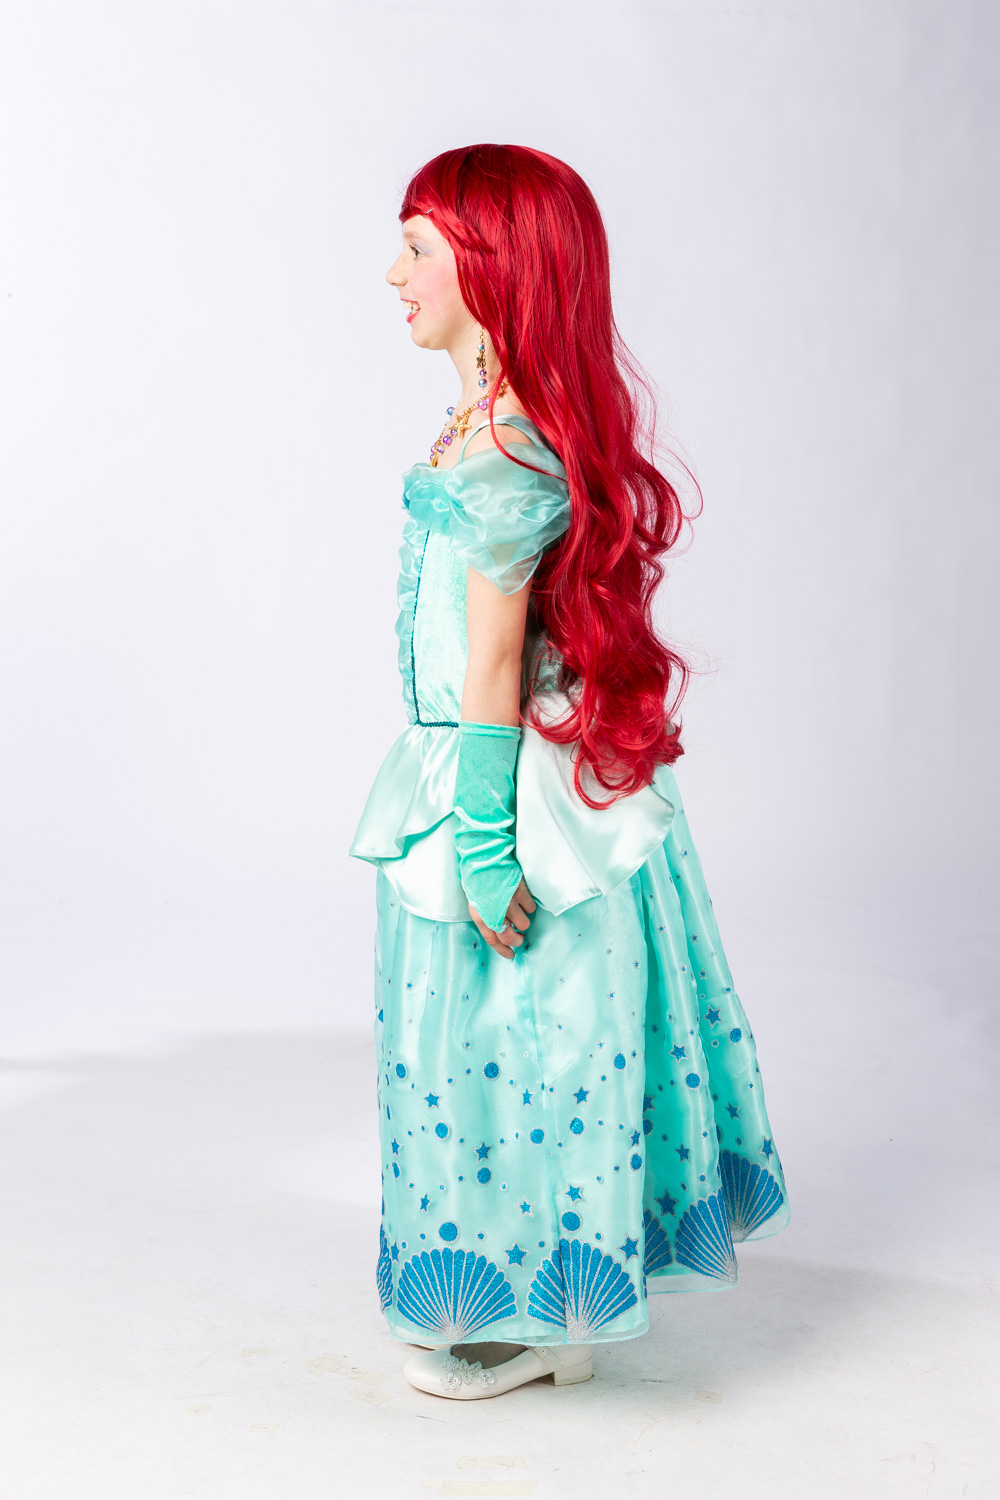 Mermaid princess costume